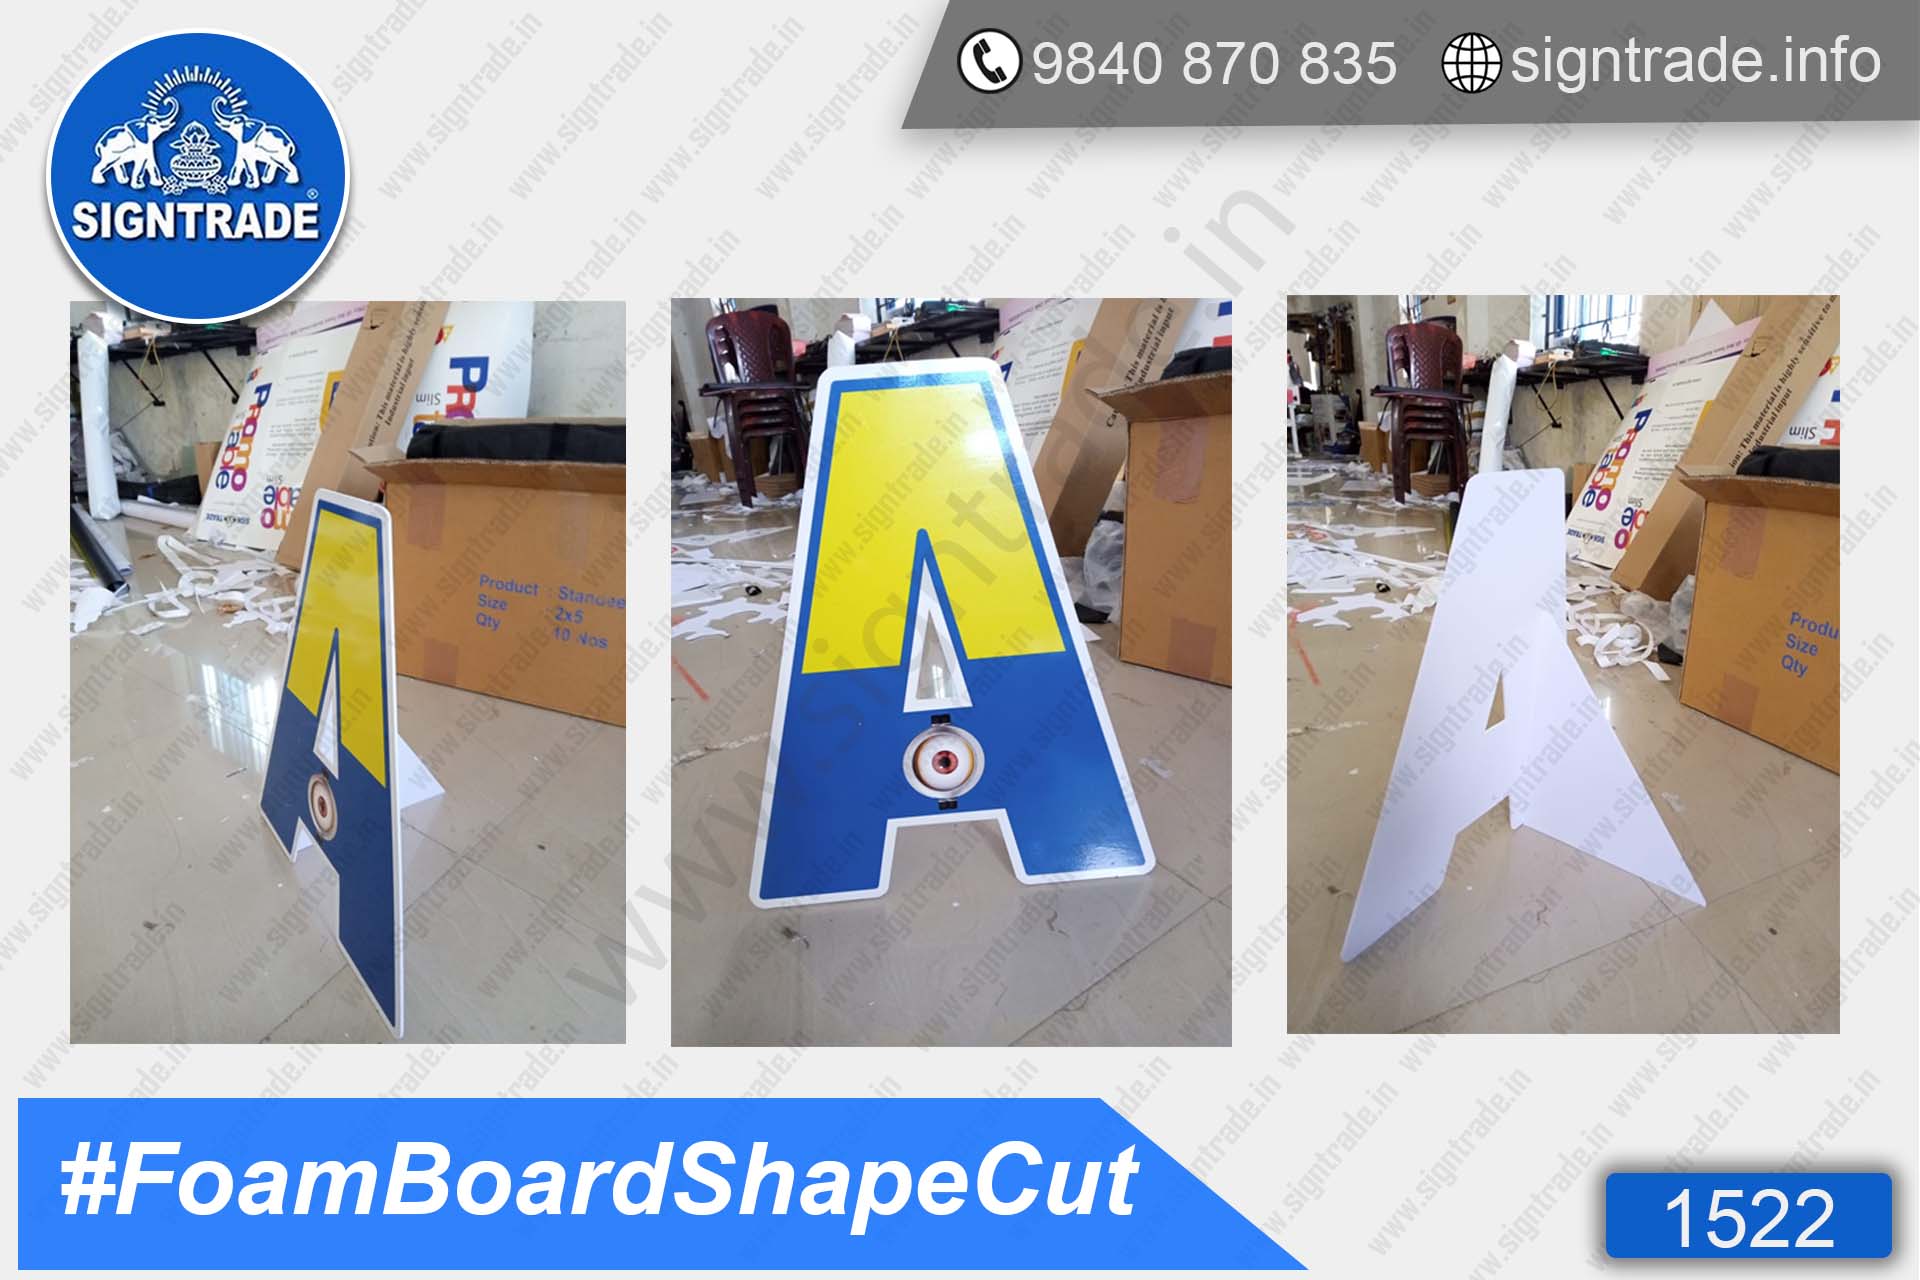 Cute Baby Foam Board CutOut Display - SIGNTRADE - Foam Board CutOut Board Manufacture in Chennai